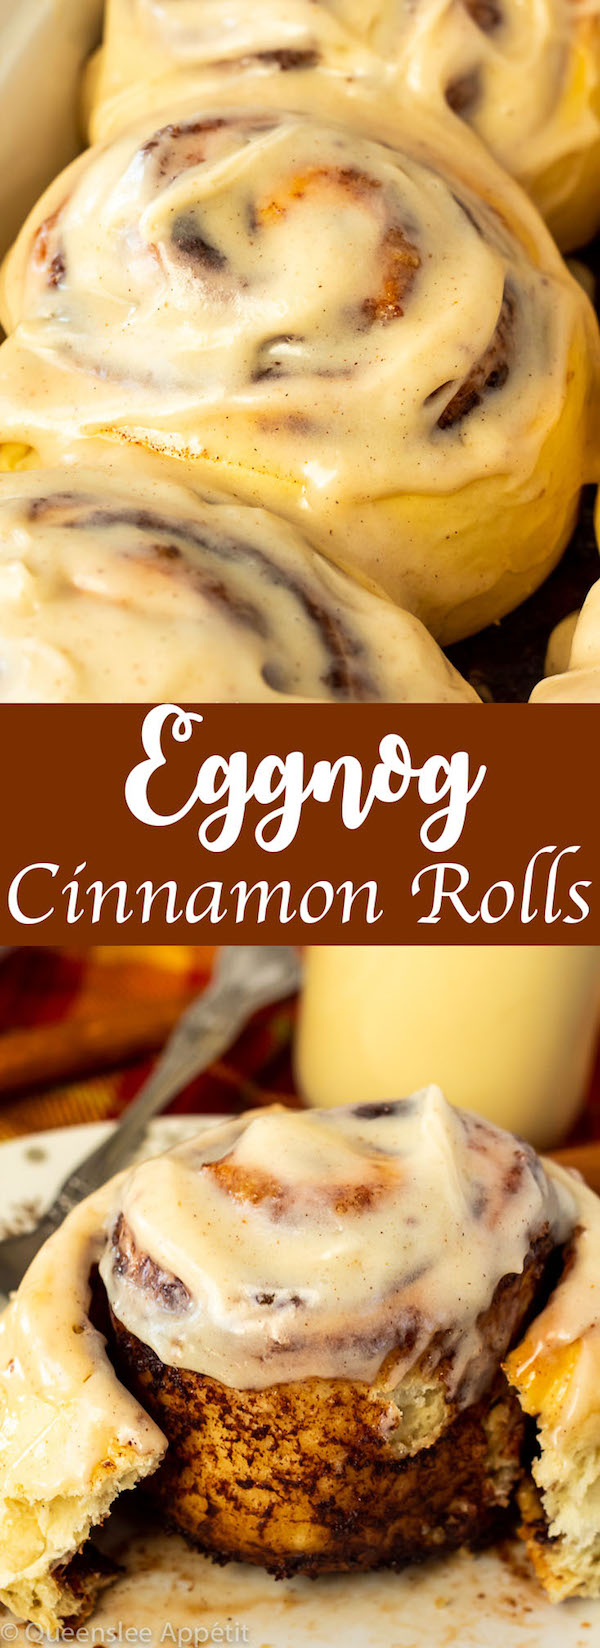 Eggnog Cinnamon Rolls